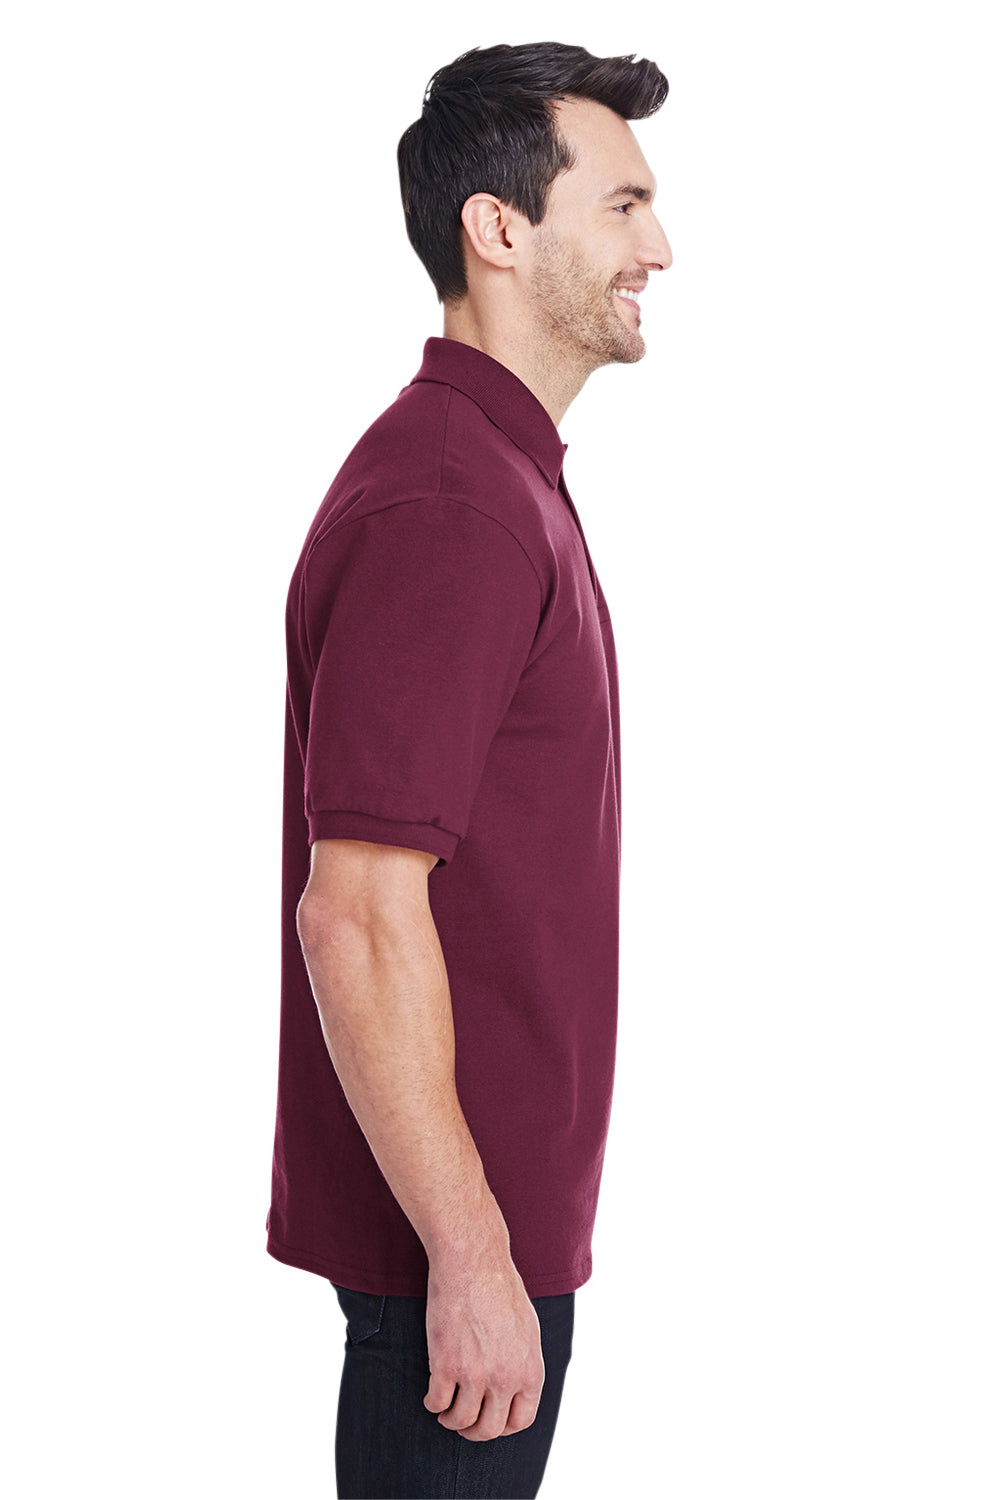 Jerzees 443MR Mens Short Sleeve Polo Shirt Maroon Side